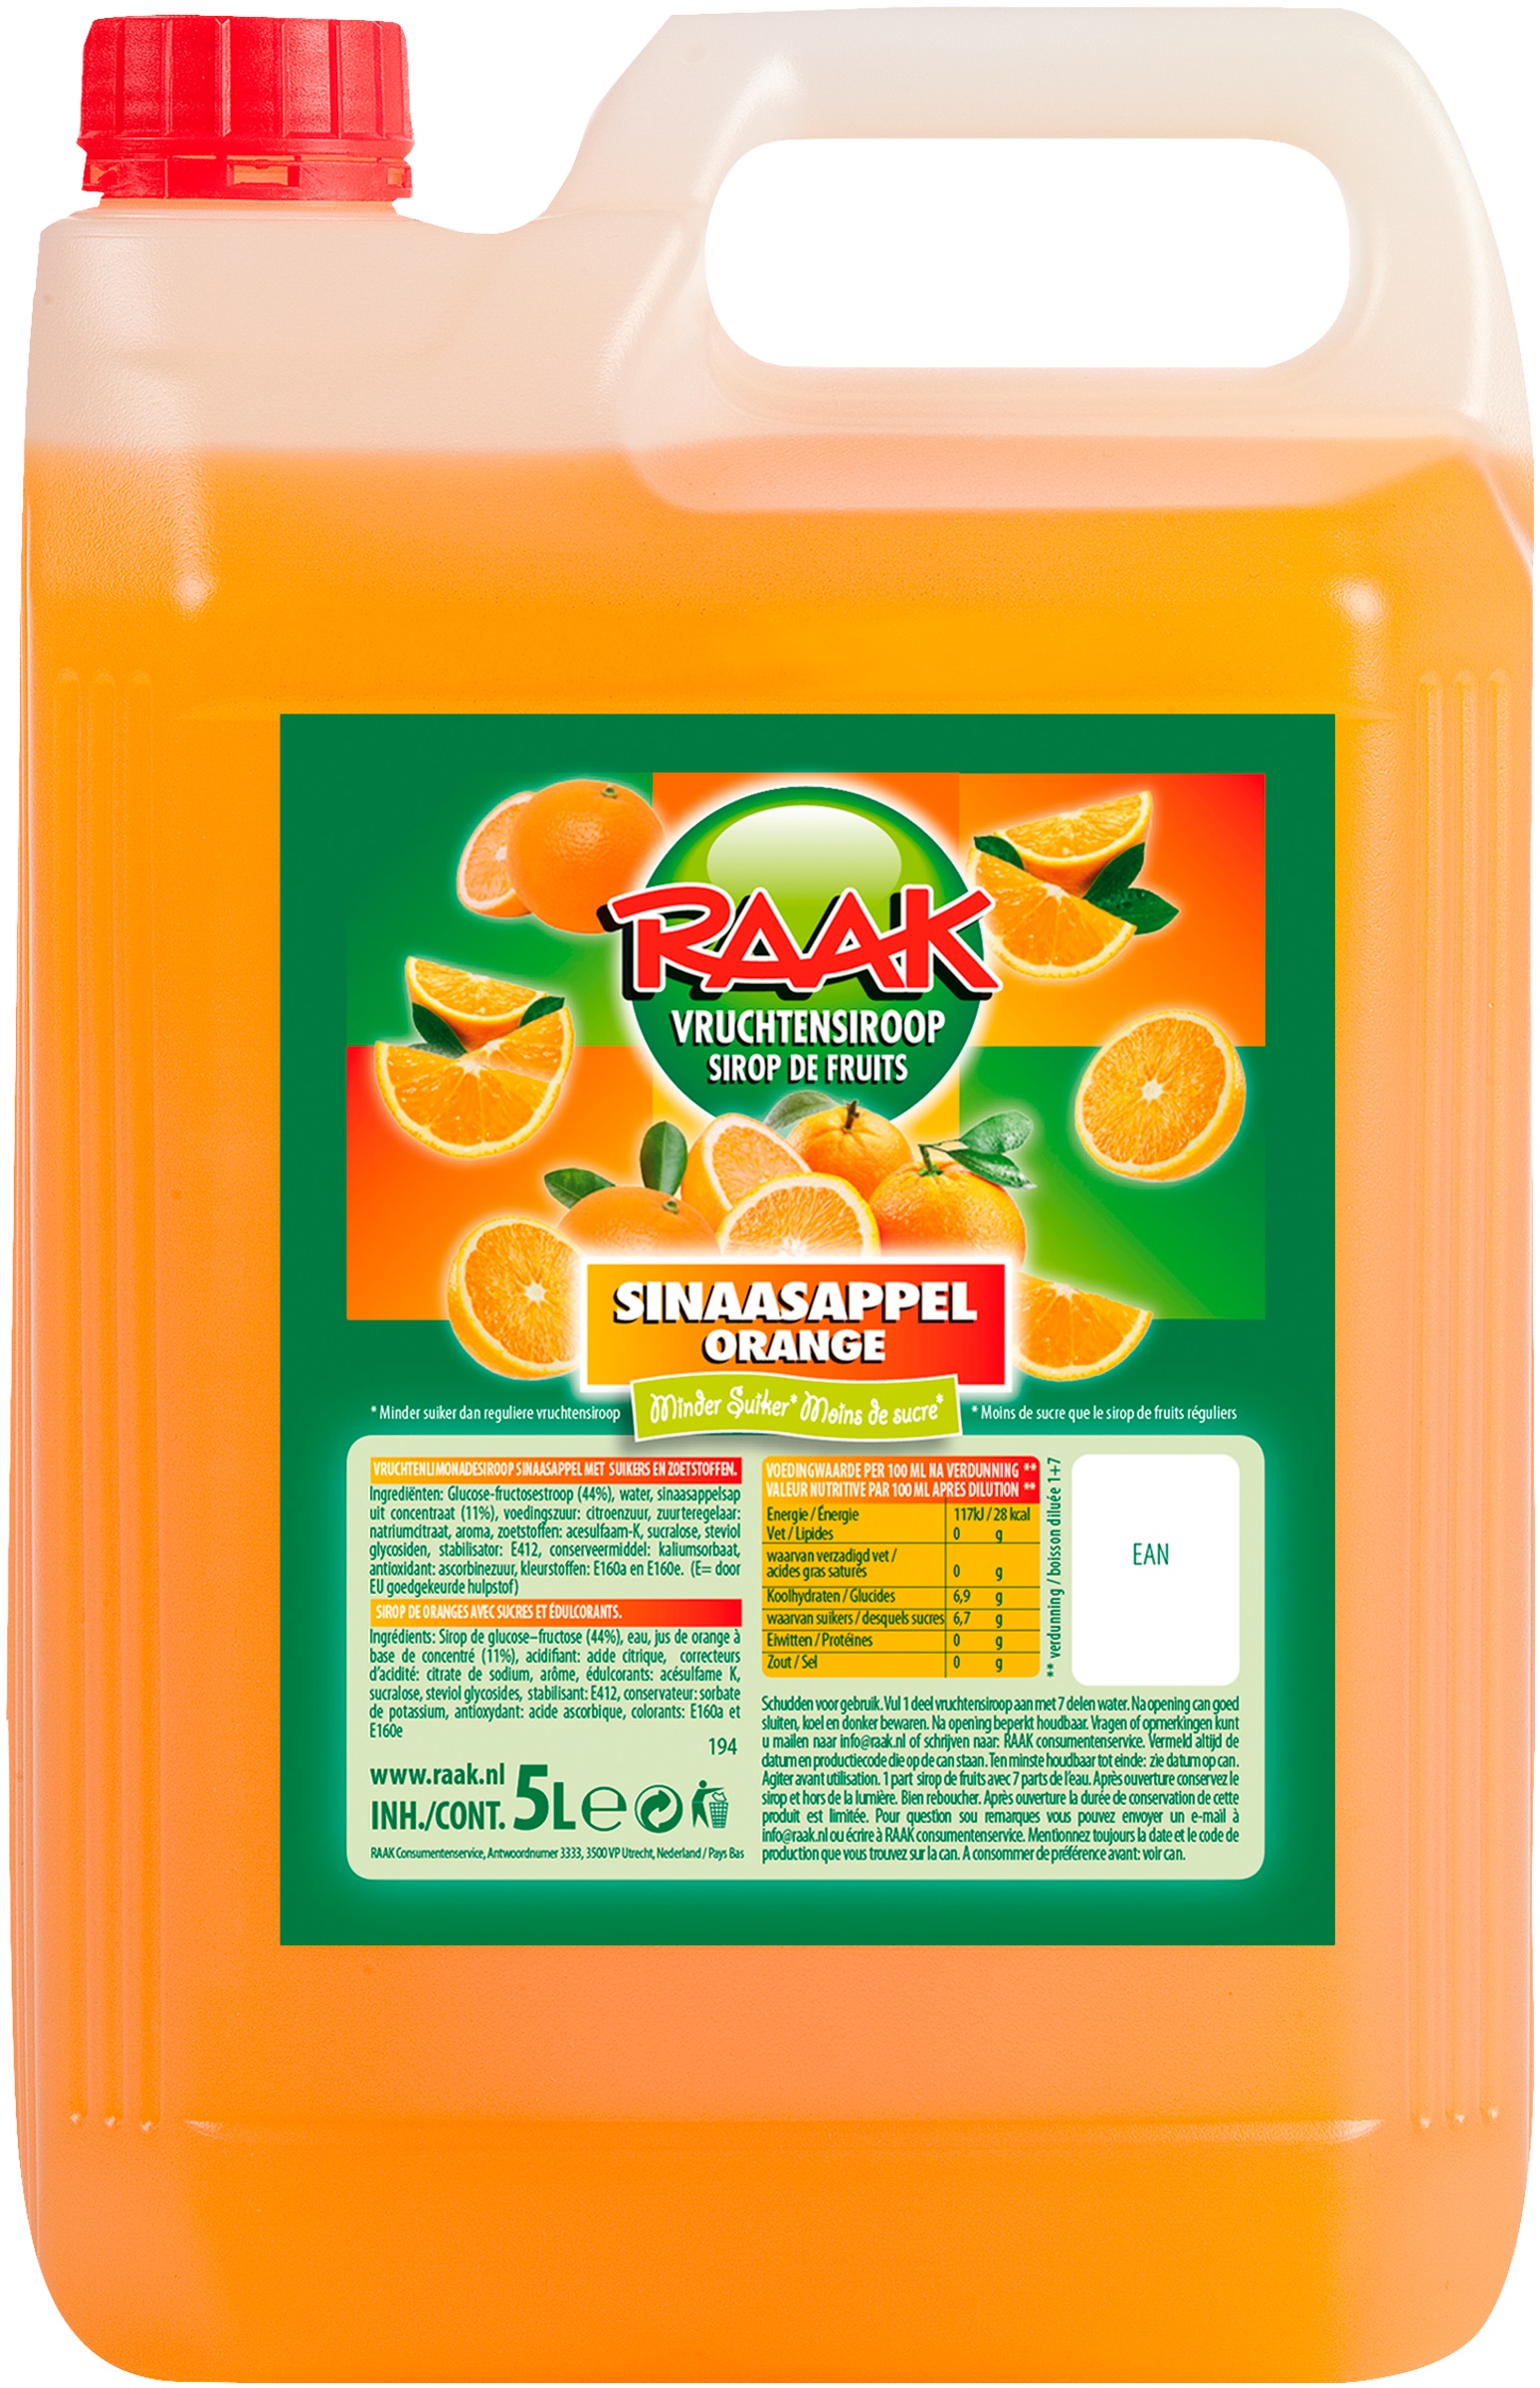 995 Limonade siroop sinaasappel 1x5 ltr